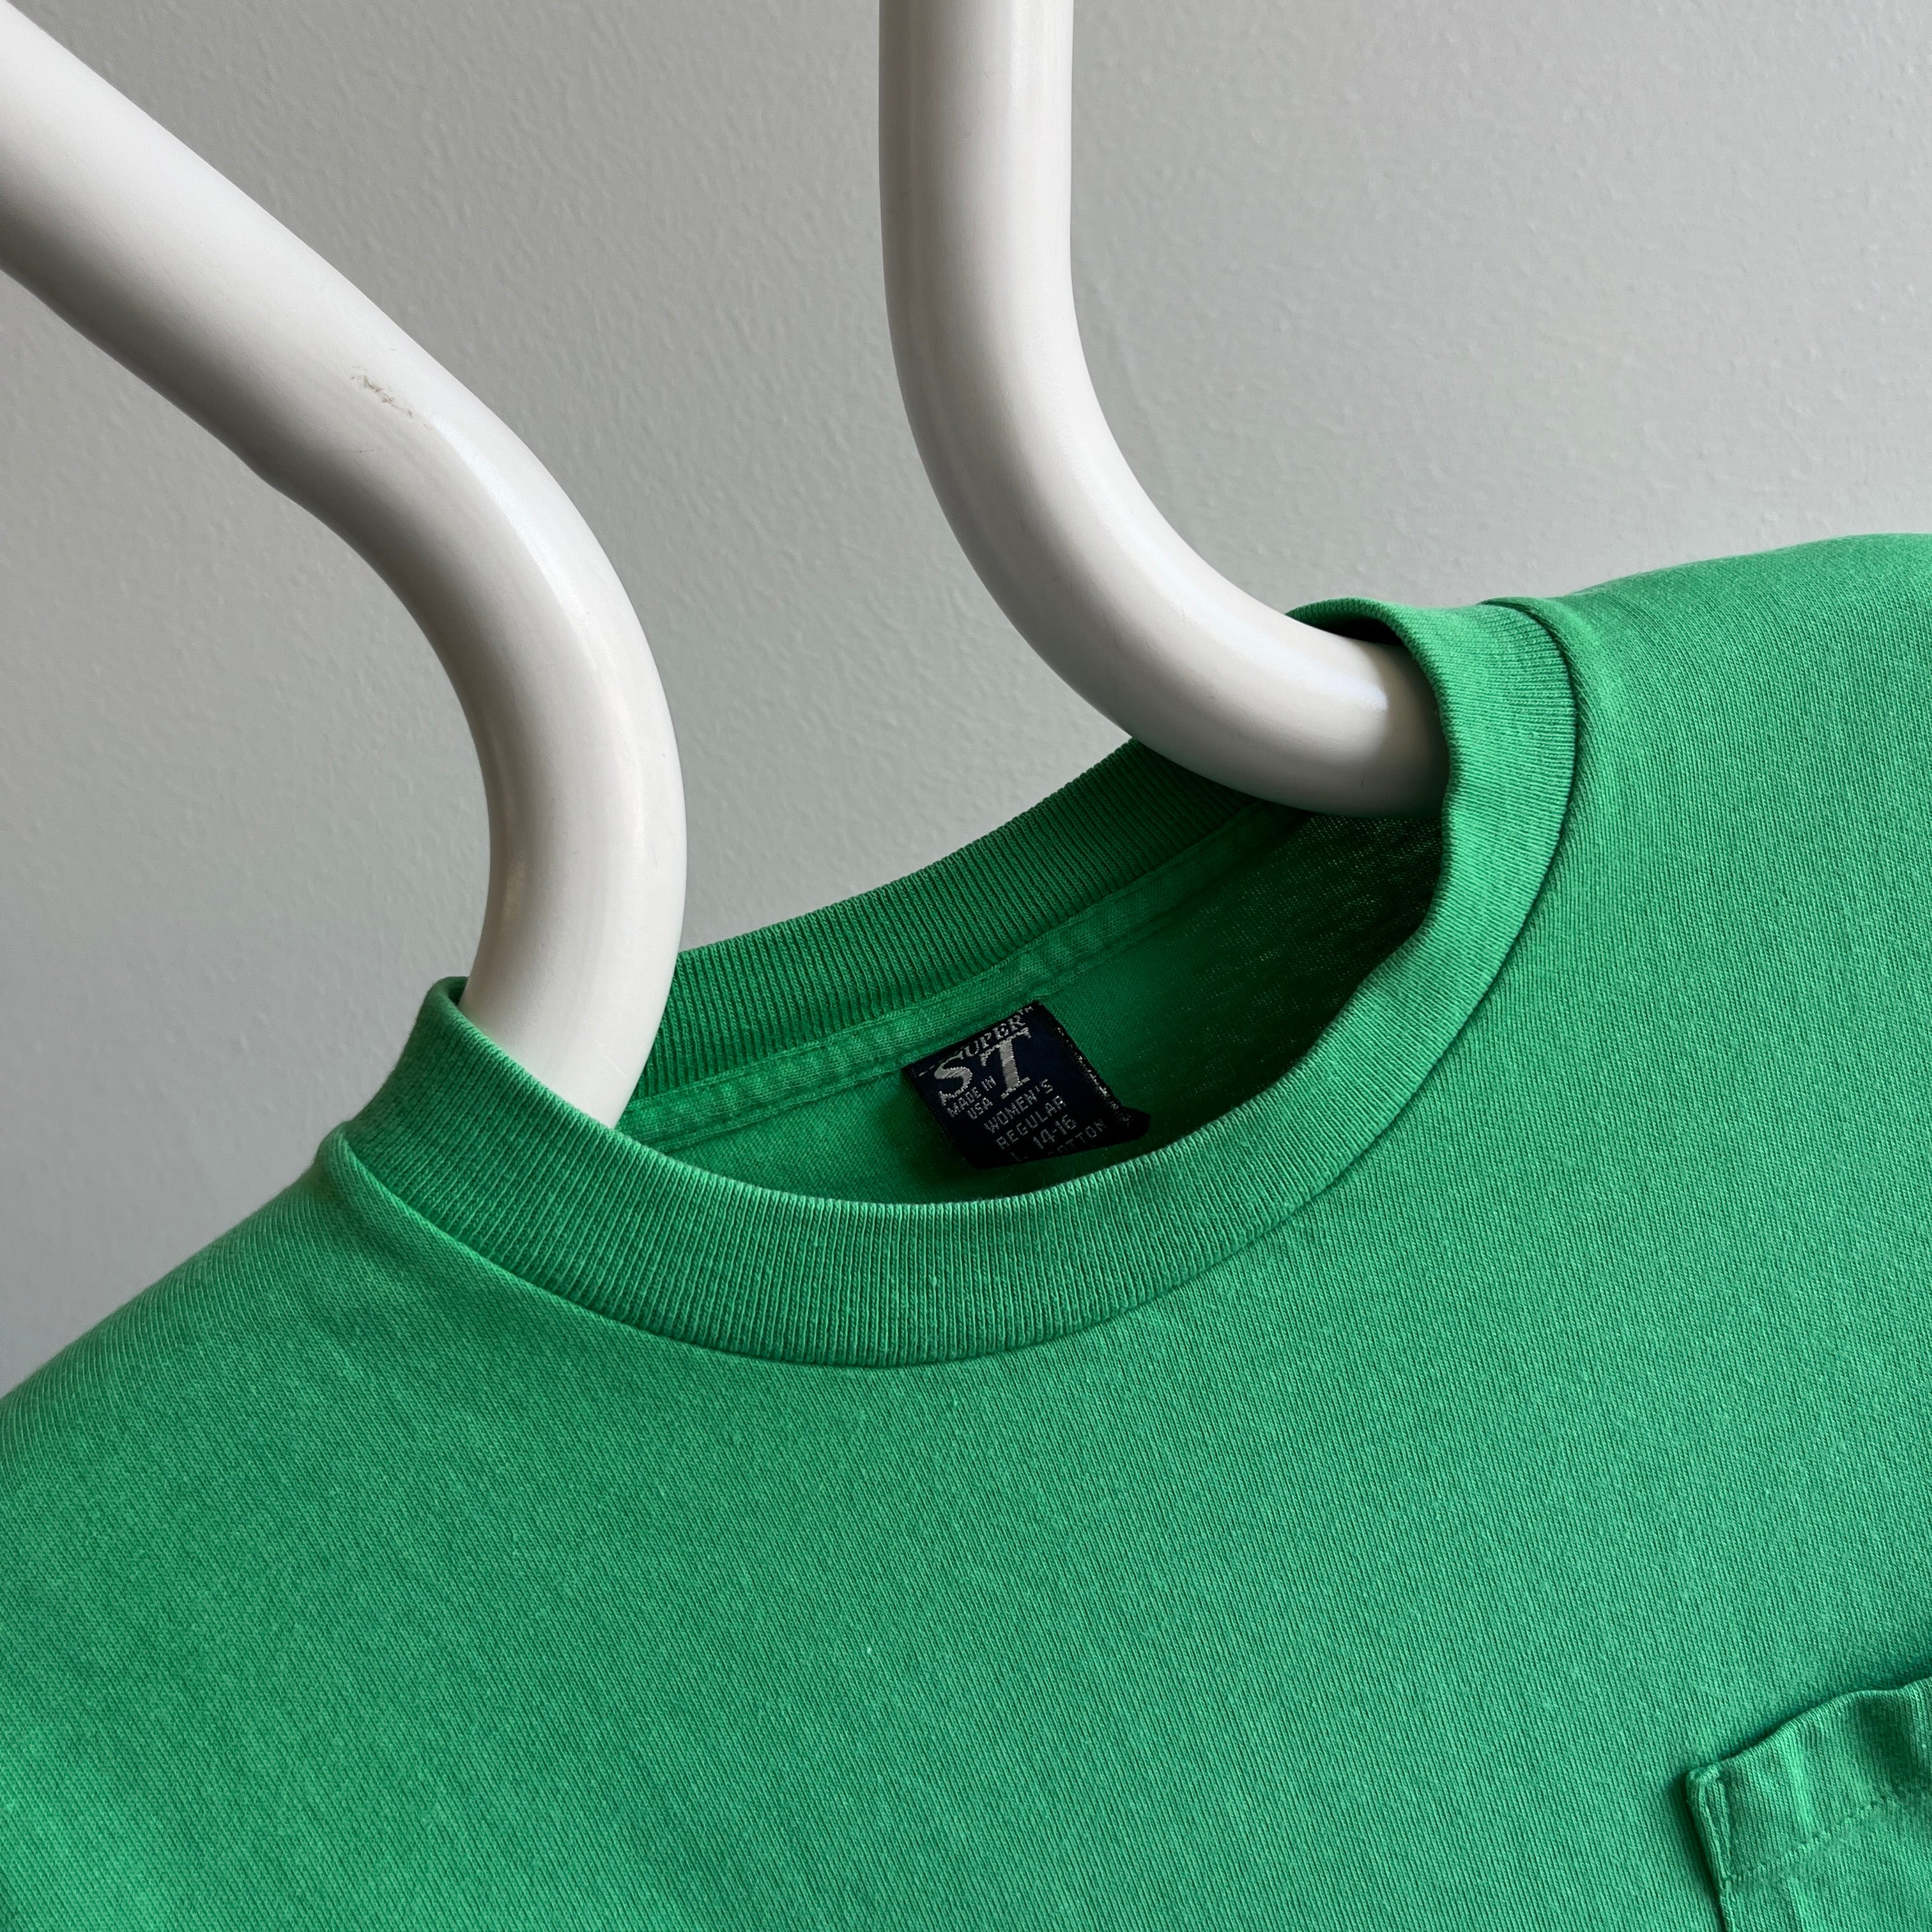 1980/90s Land's End USA Made Women's Cotton Super Pocket T-Shirt in a Grass Green